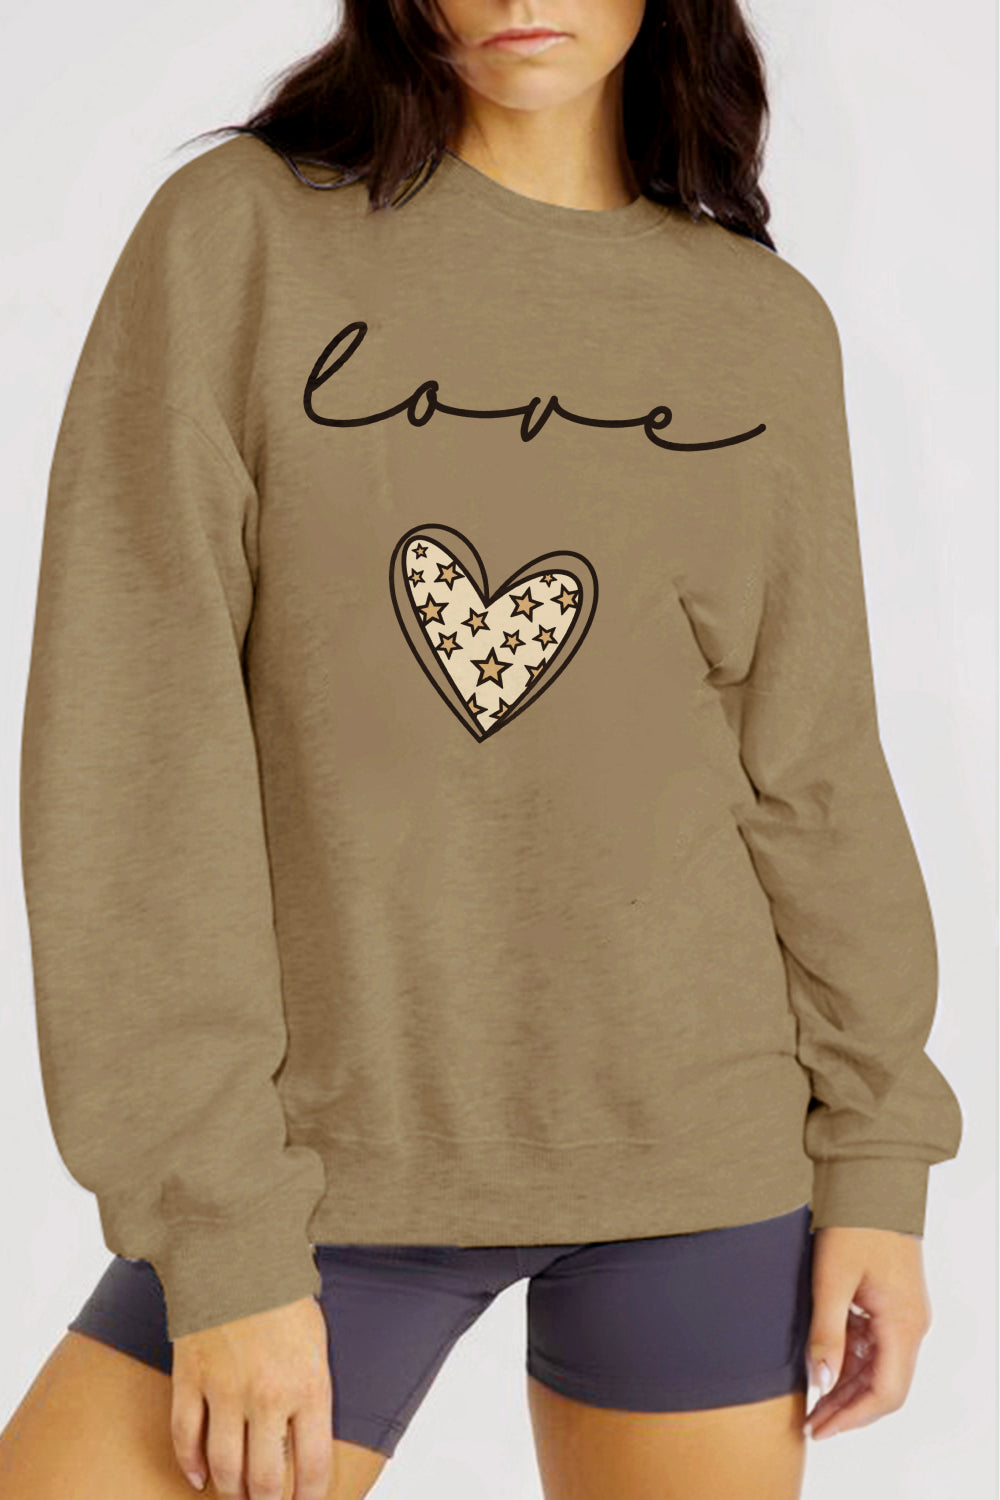 Dim Gray Simply Love Full Size LOVE Graphic Sweatshirt